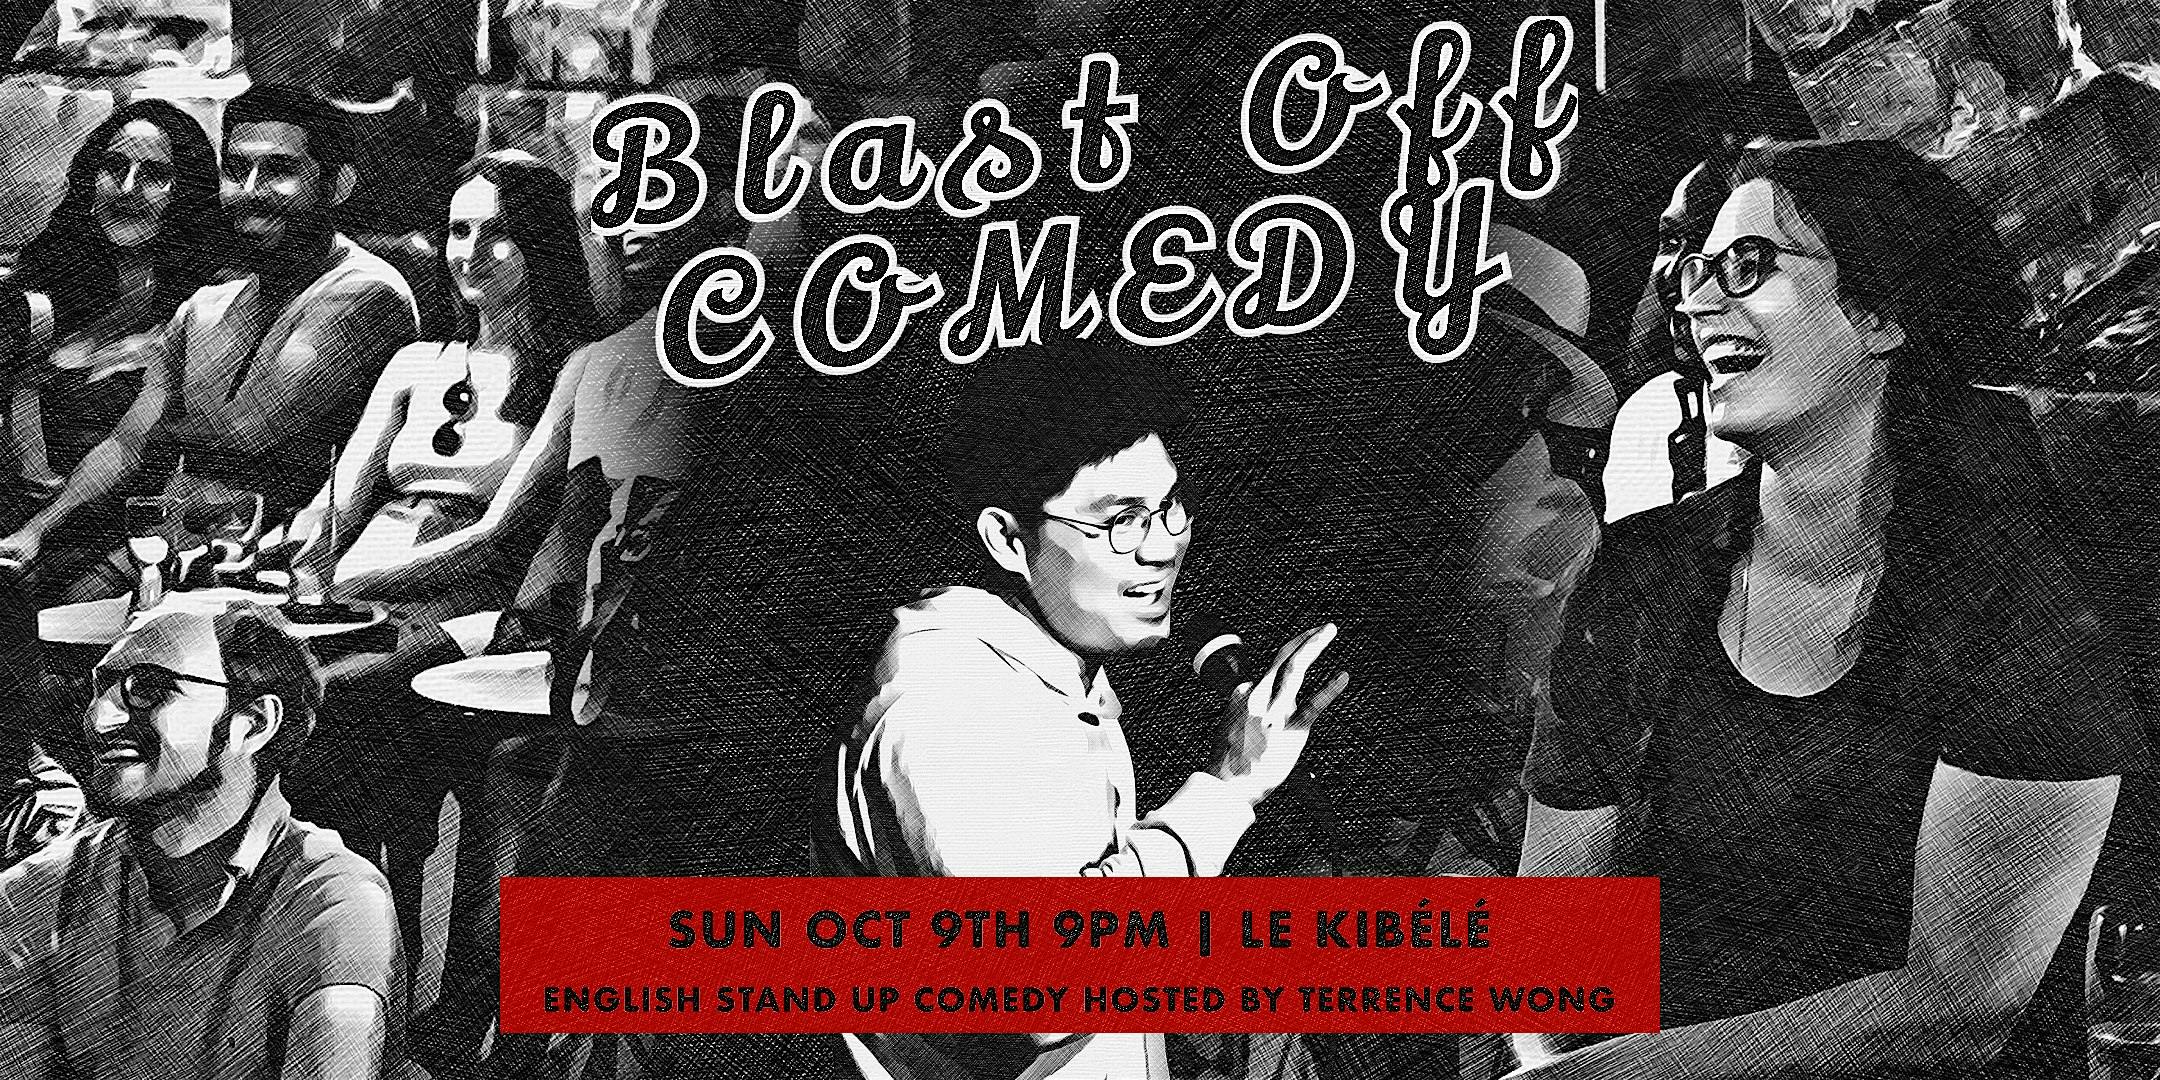 English Stand Up Comedy Sunday Showcase 09.10 - Blast Off Comedy logo